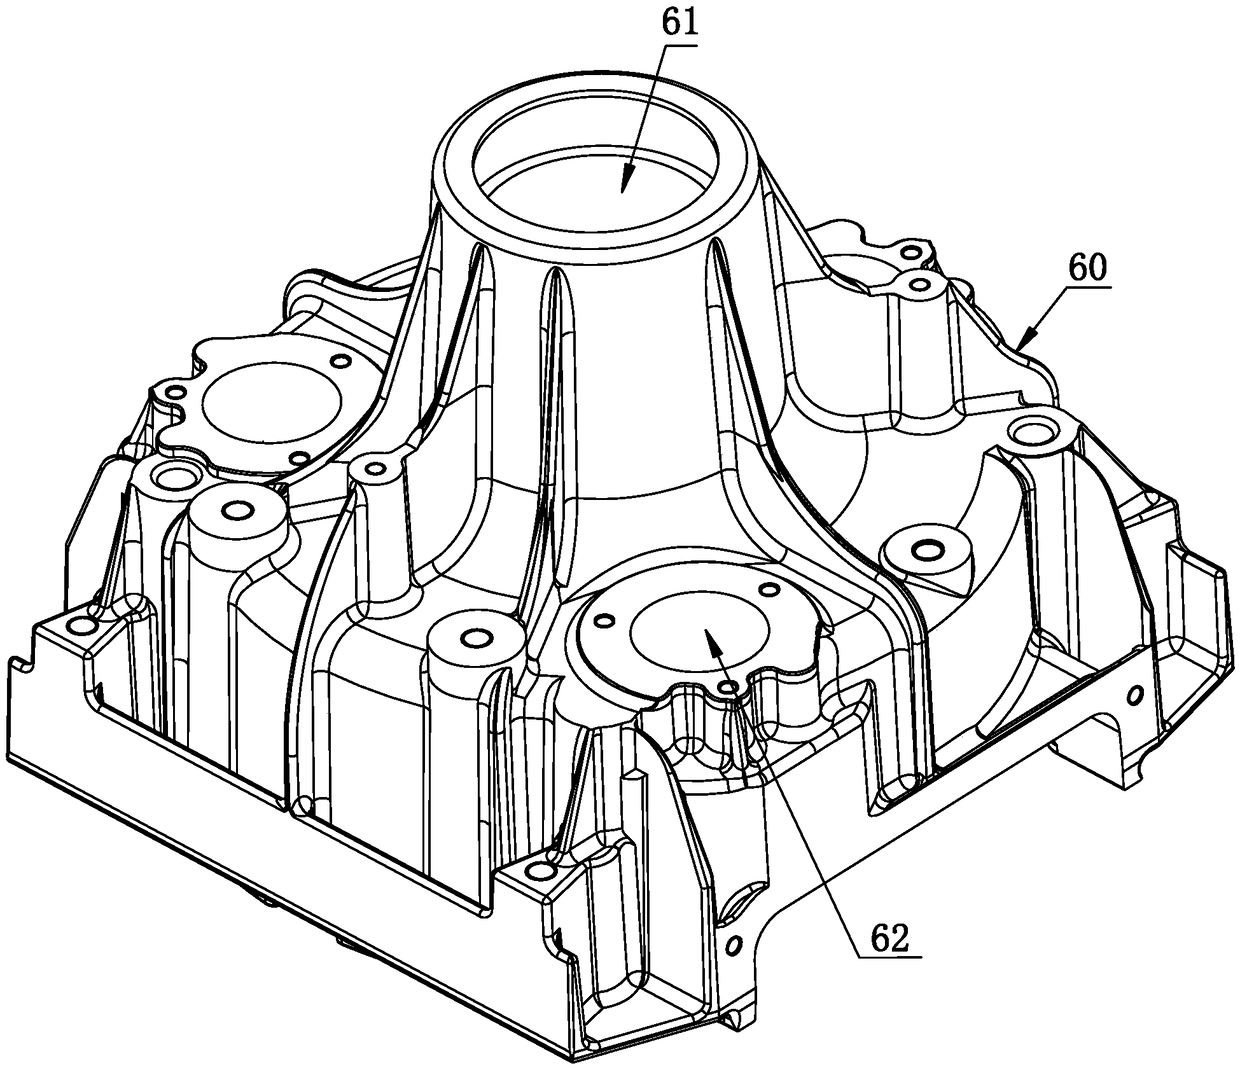 An air compressor device for an air compressor